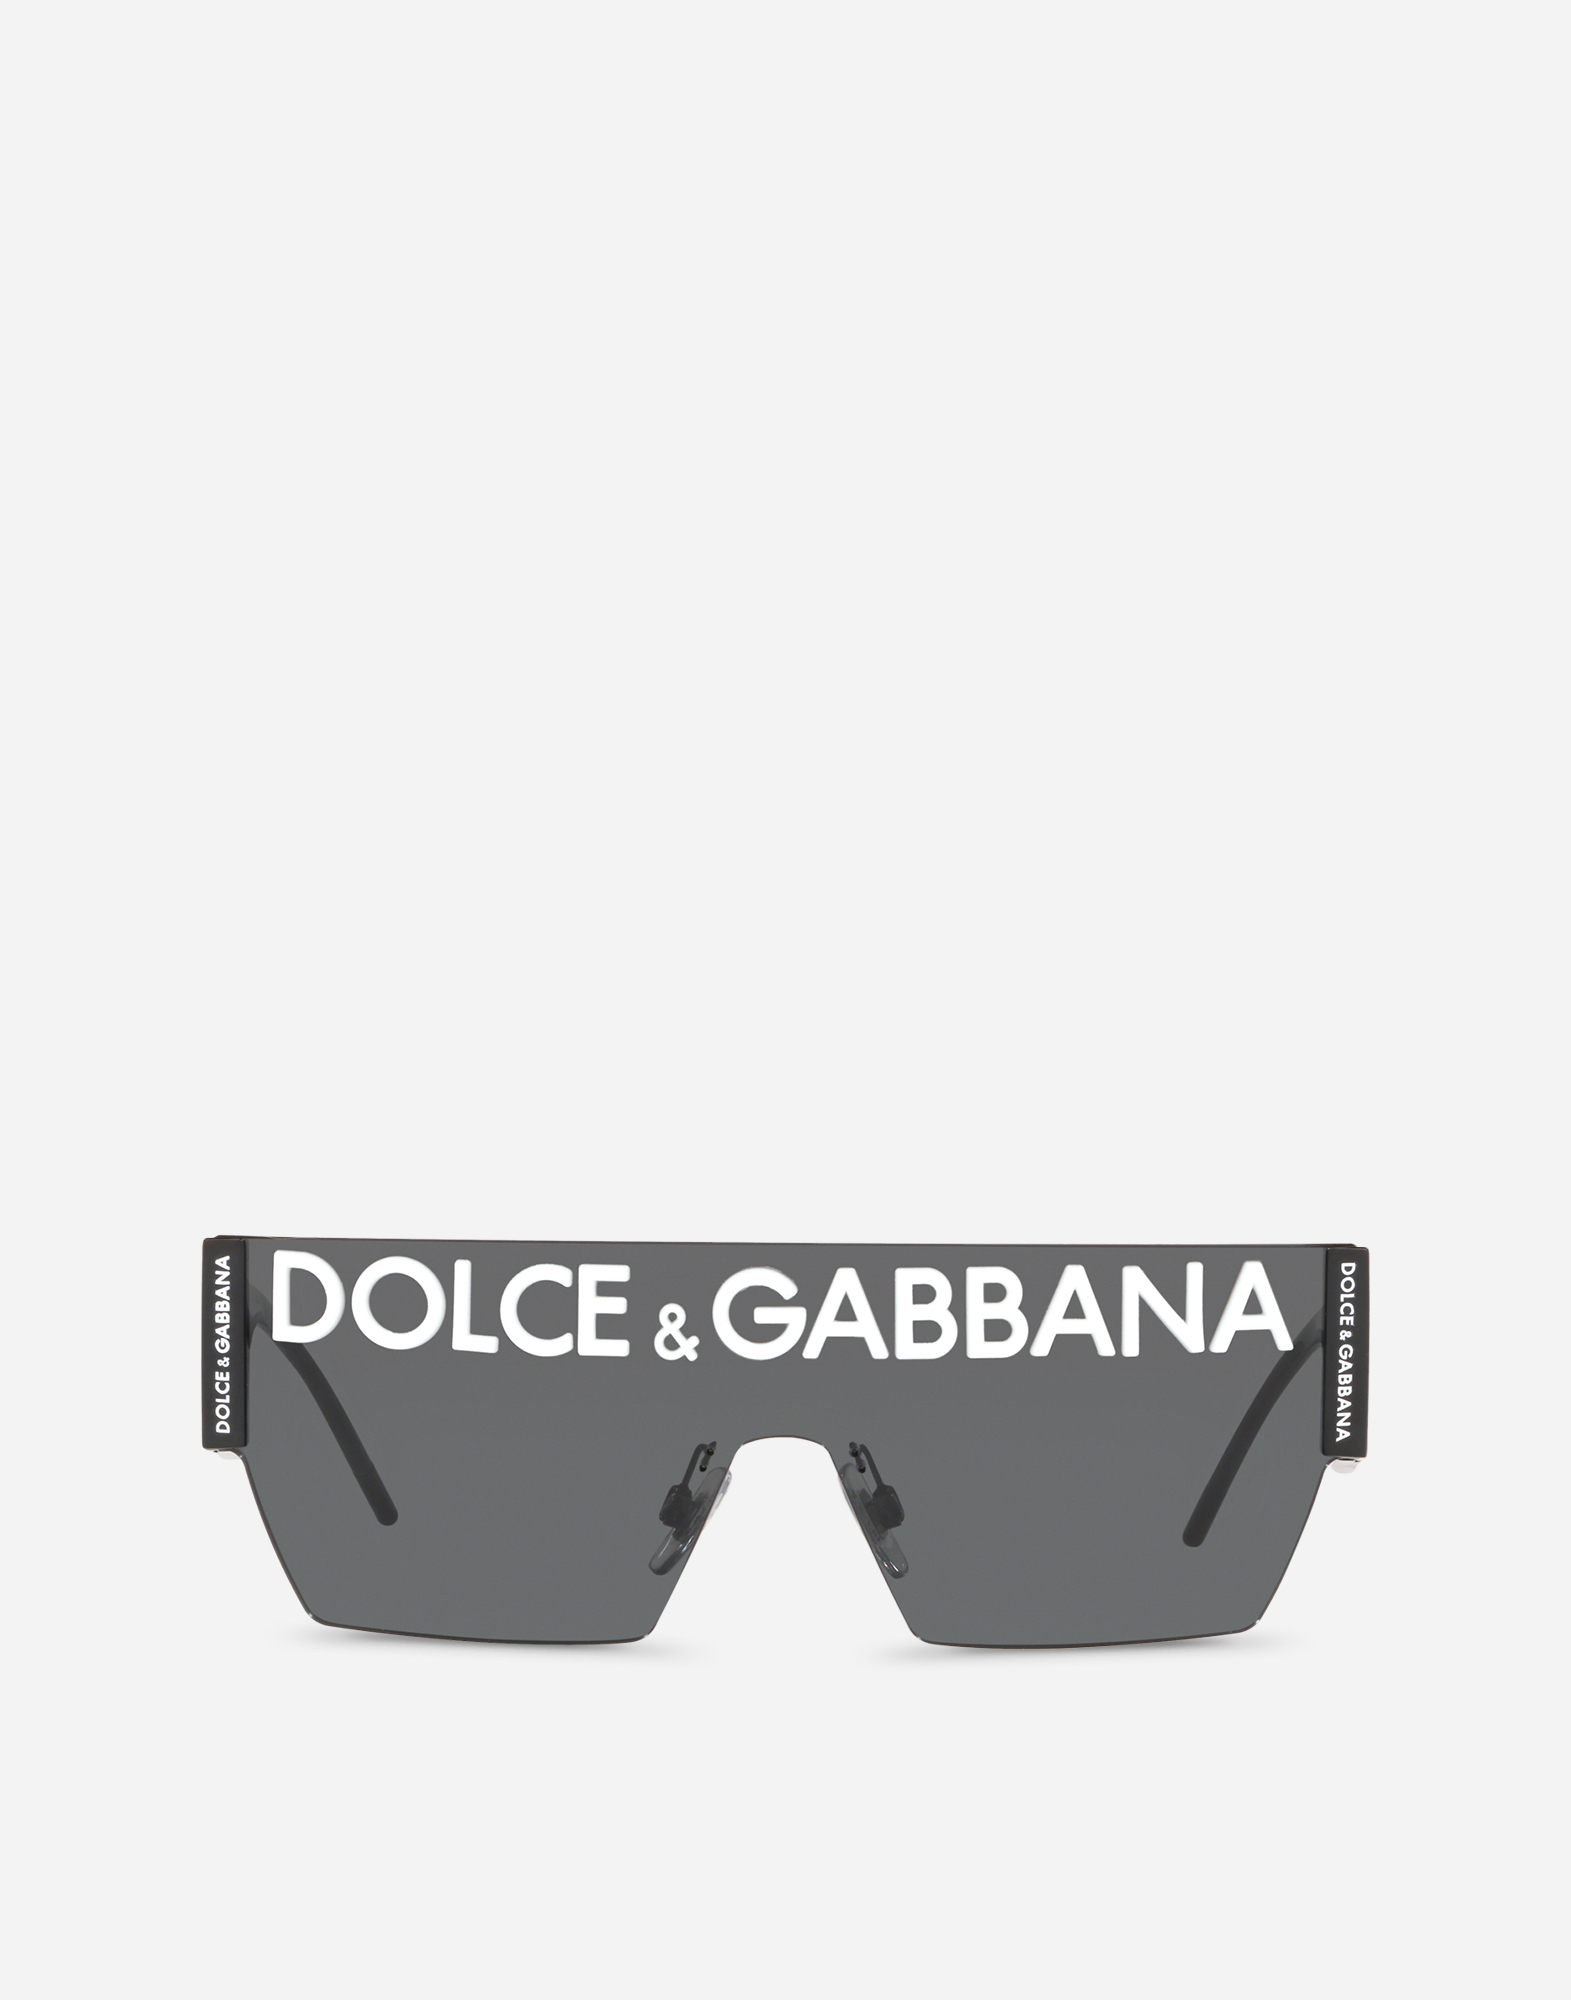 dolce and gabbana emblem